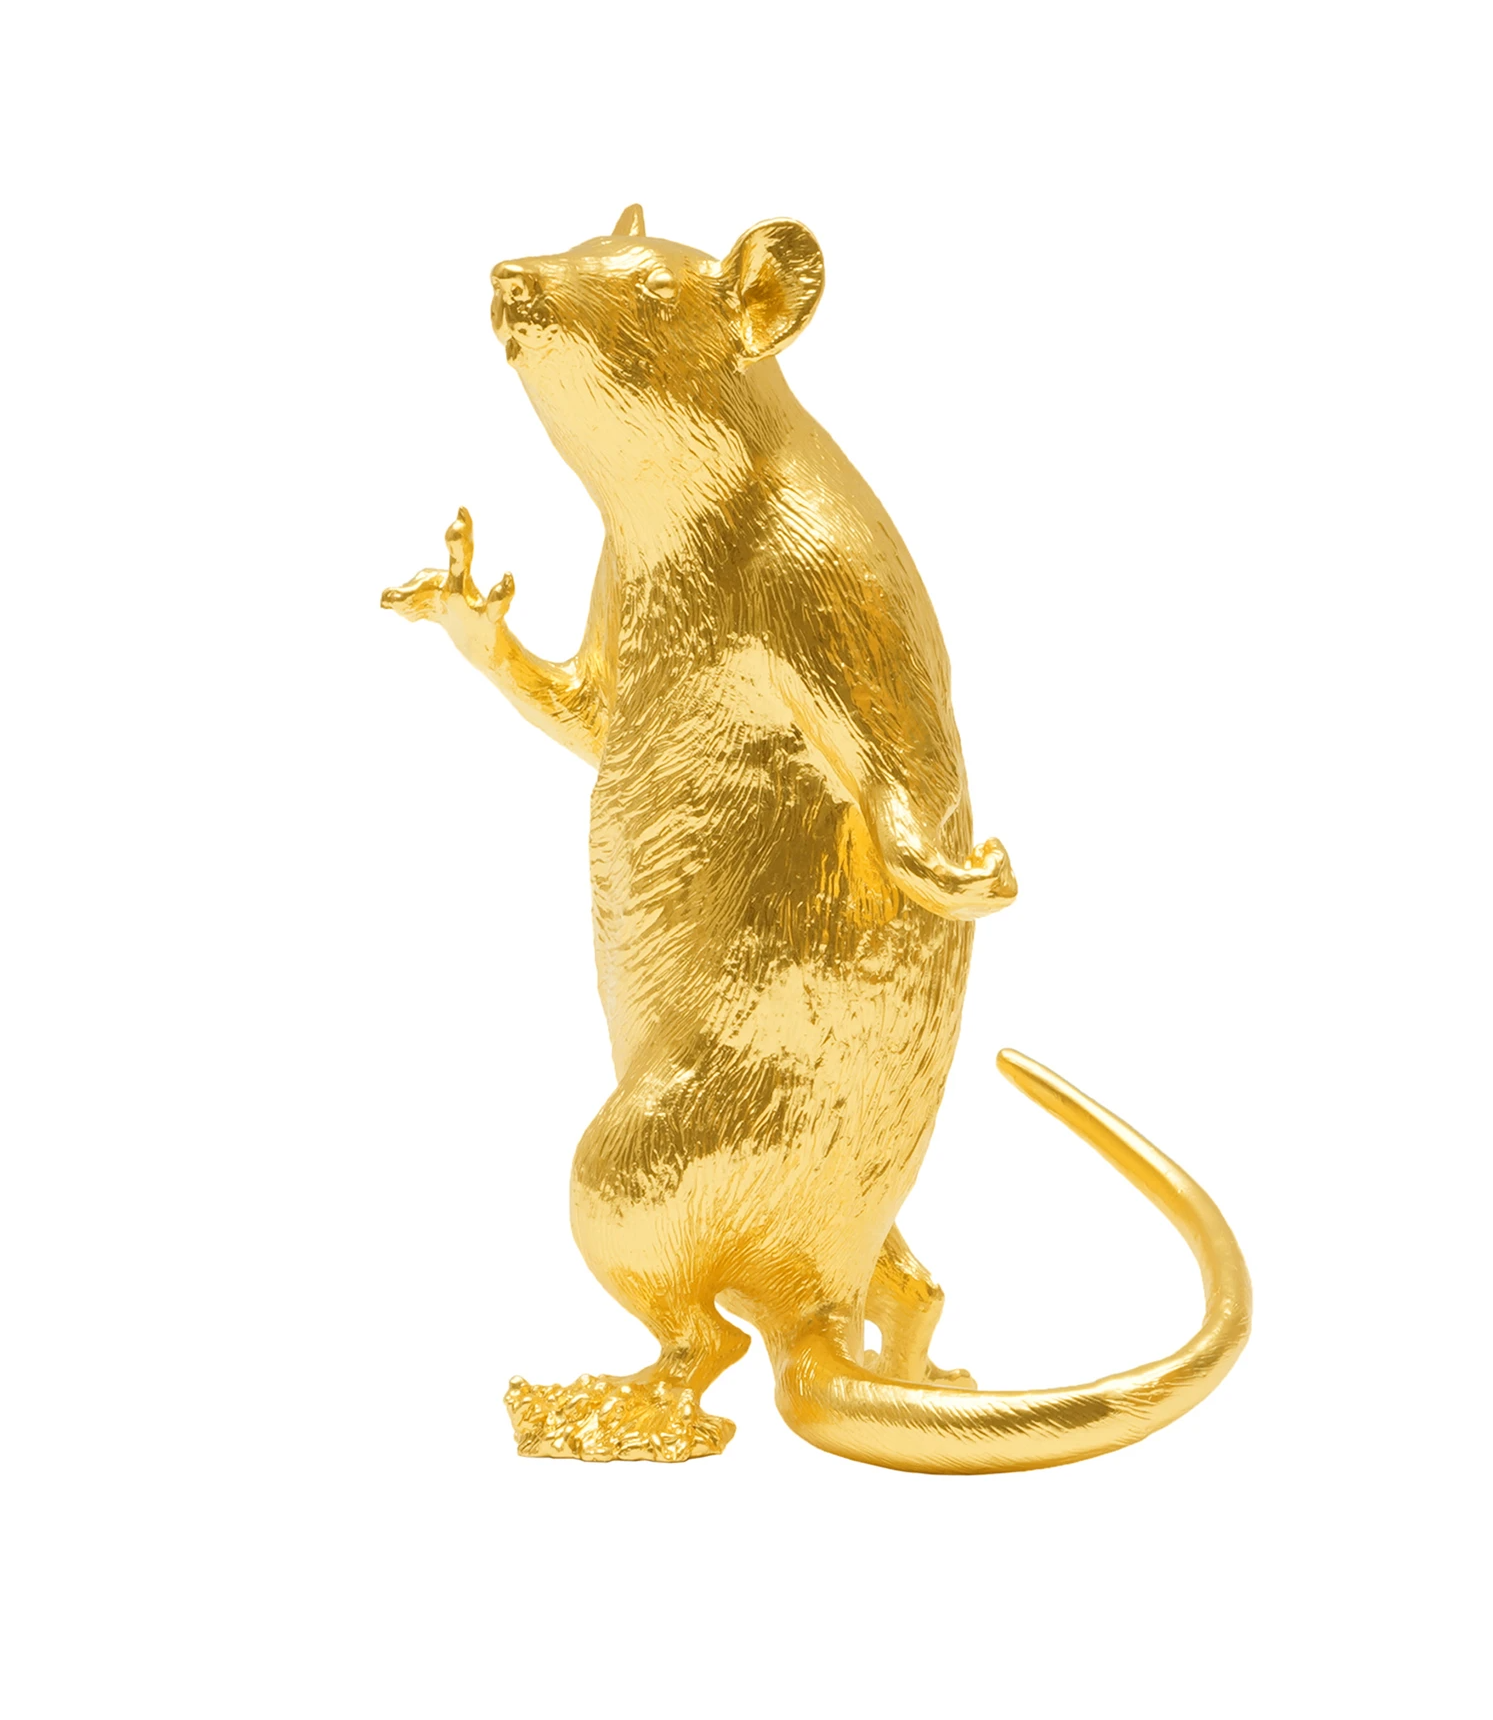 Golden Rat statue award figurine metal Blank Meme Template